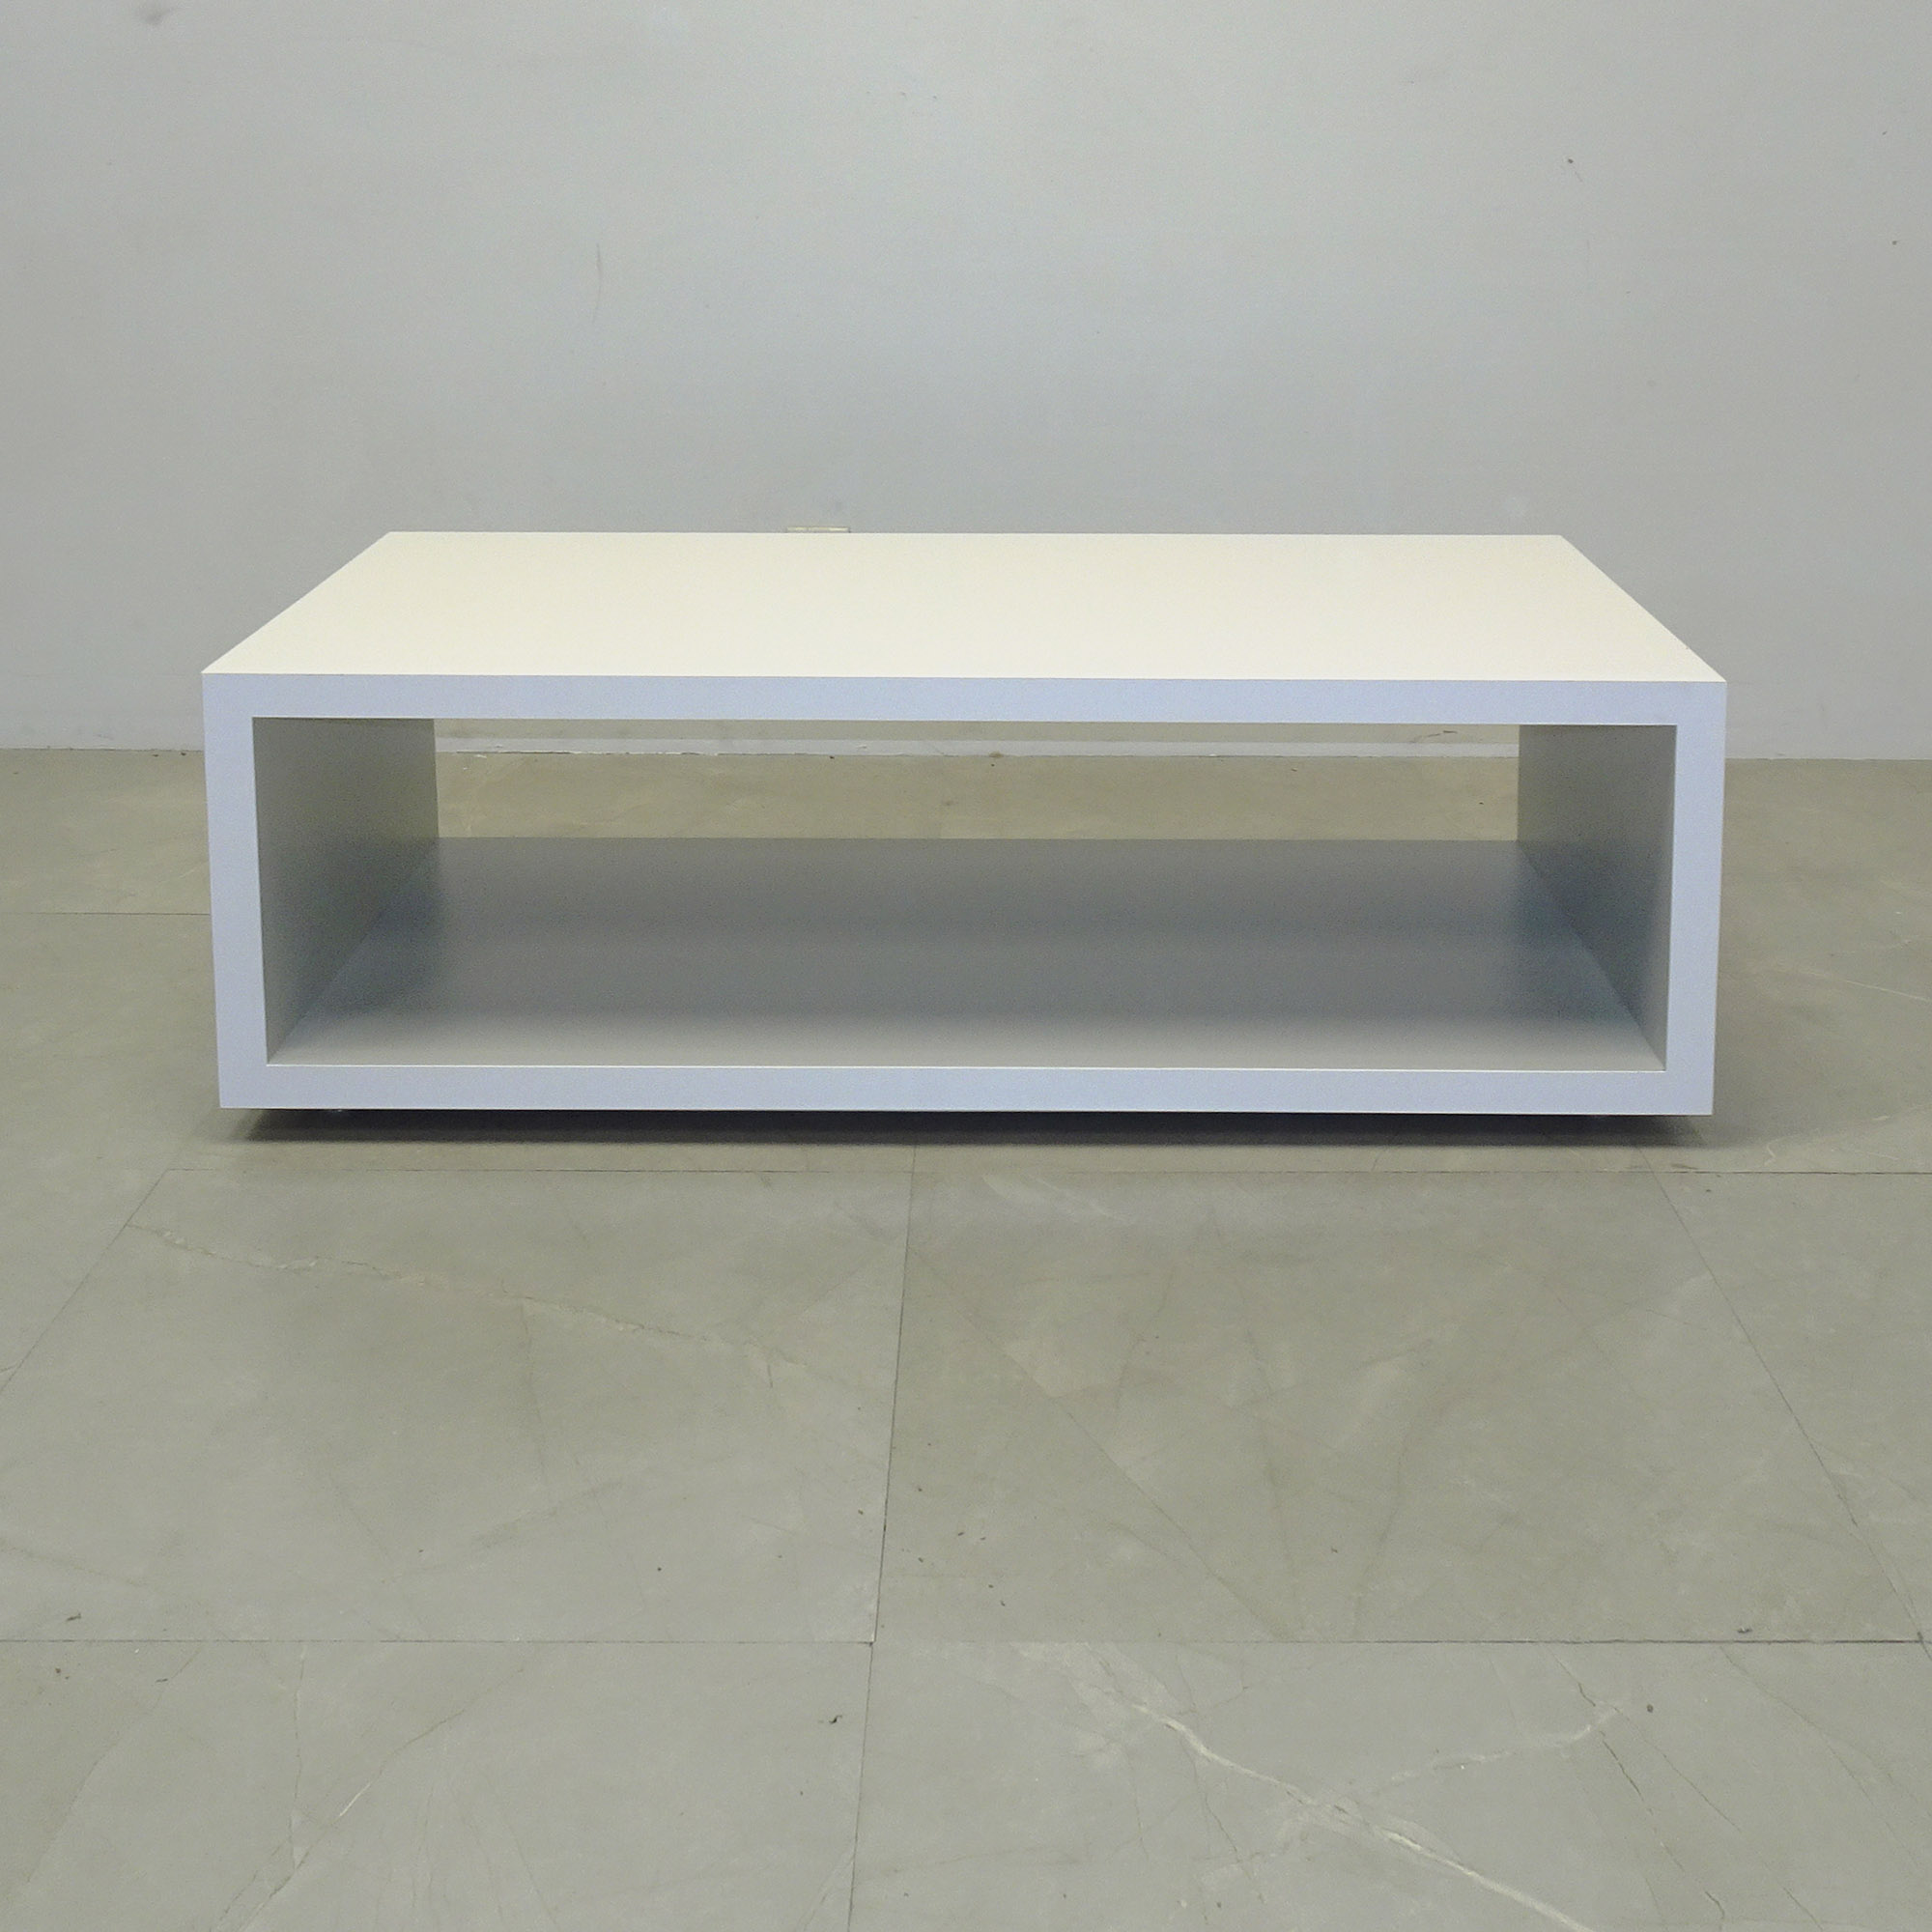 Albany Rectnagular Lobby Table in white matte laminate finish shown here.